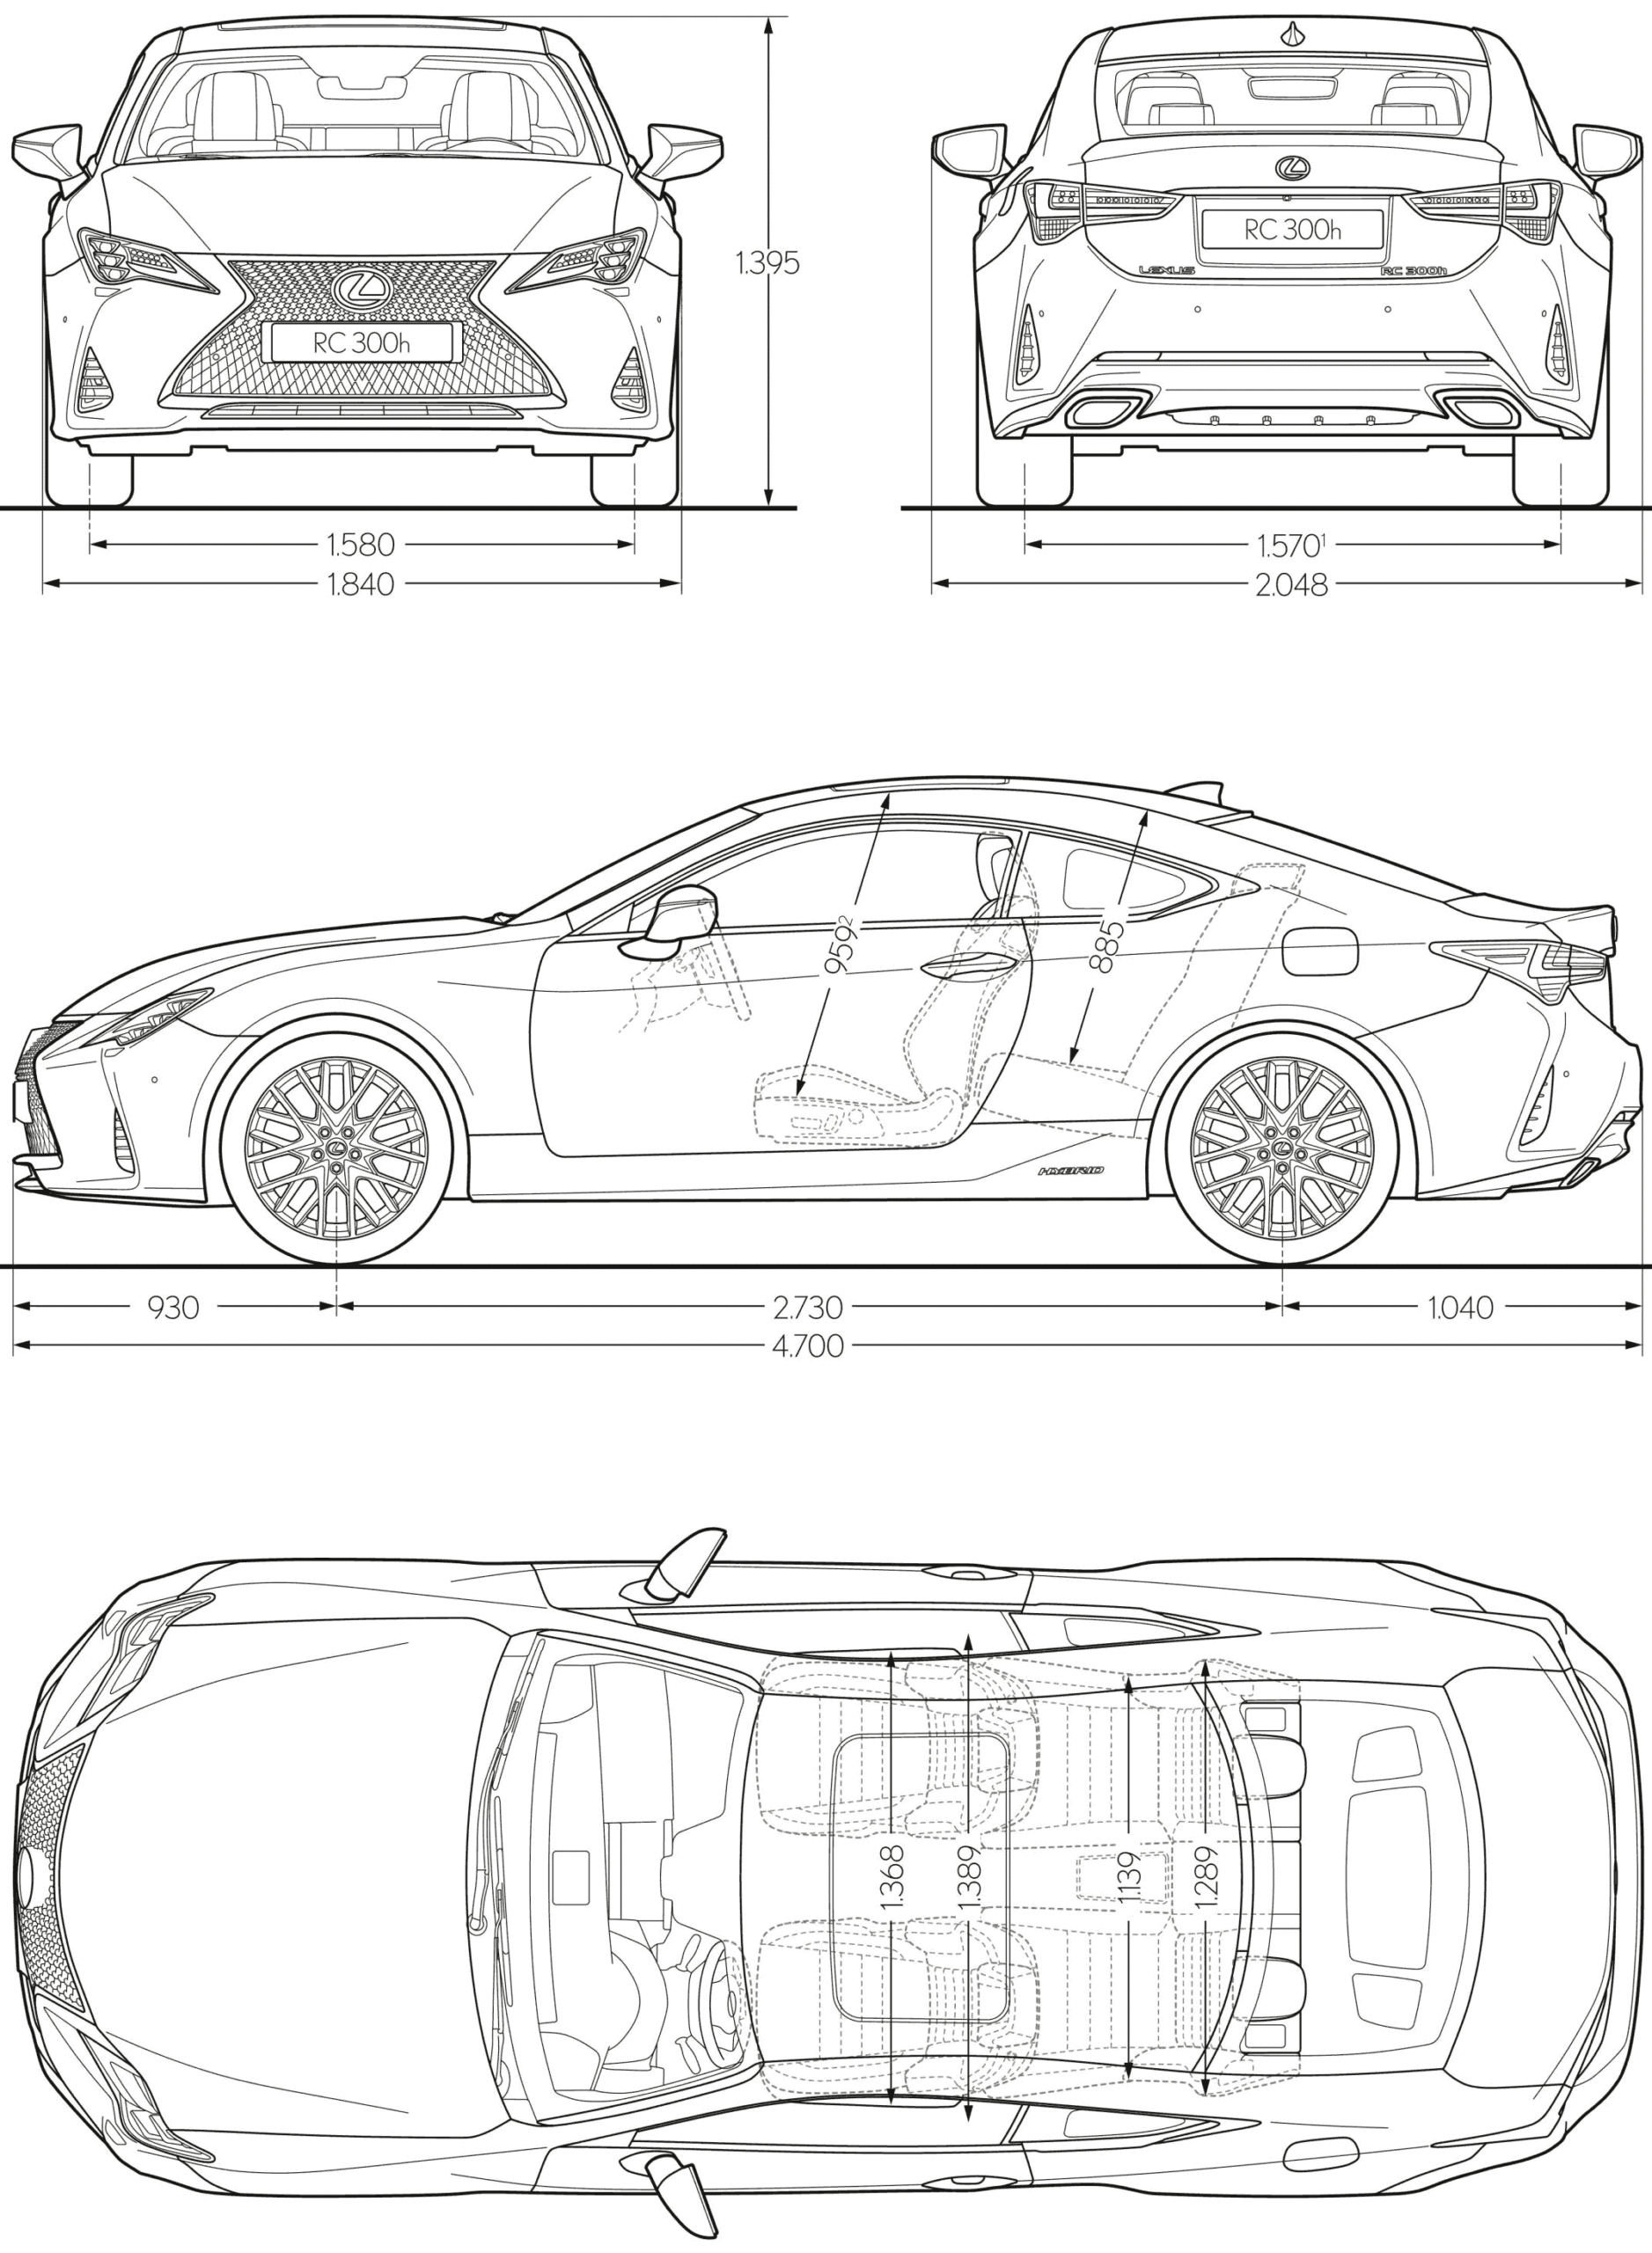 Lexus RC 300h blueprint